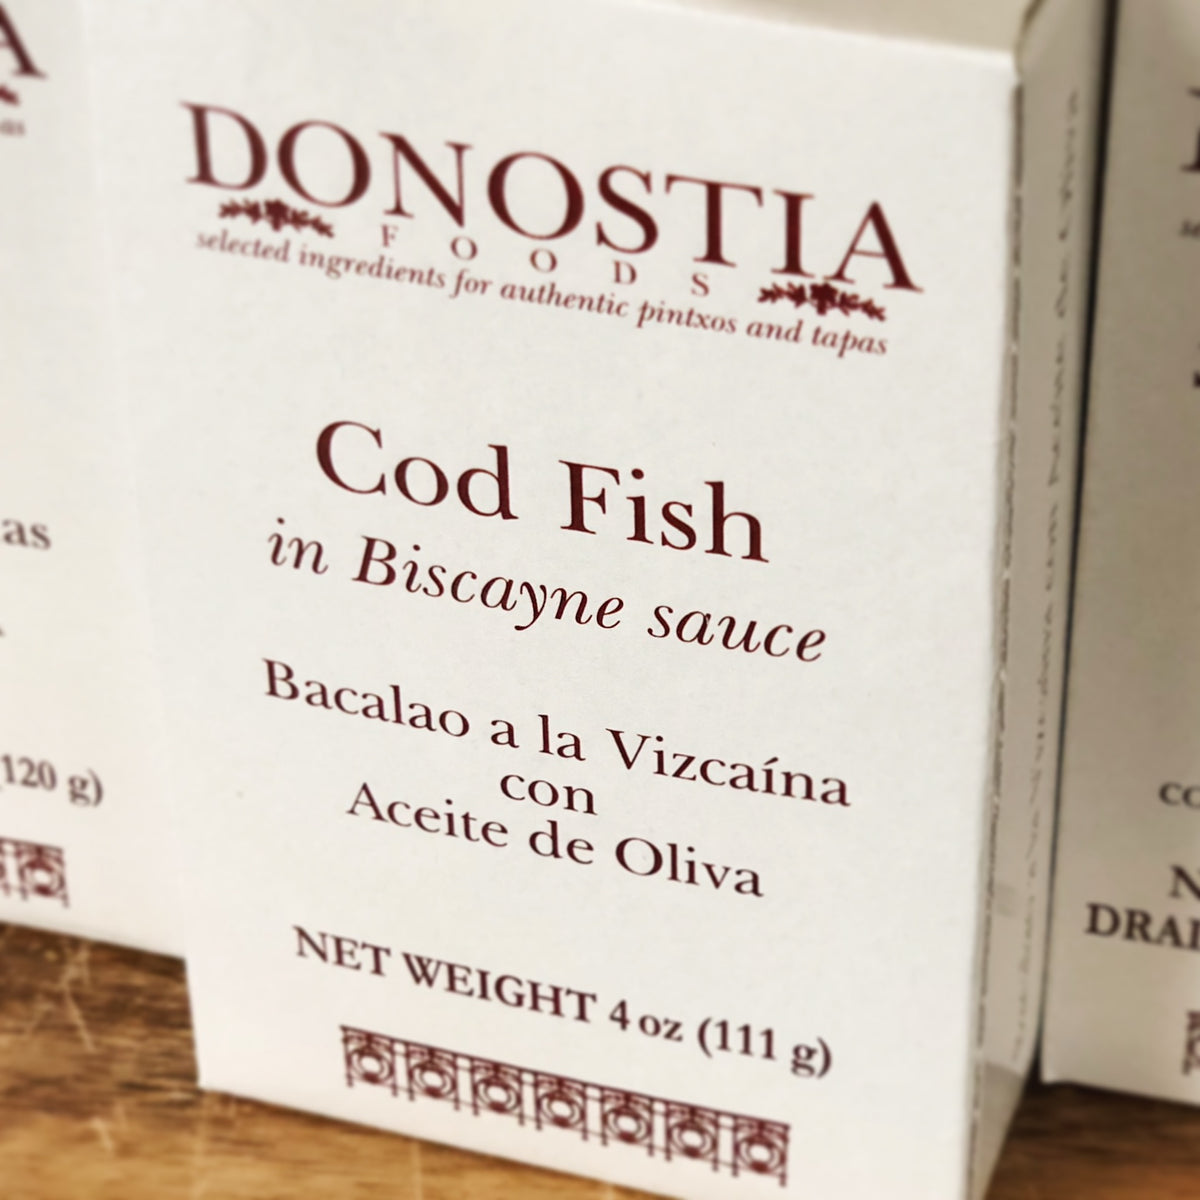 Donostia - Cod Fish in Biscayne Sauce - Space Camp